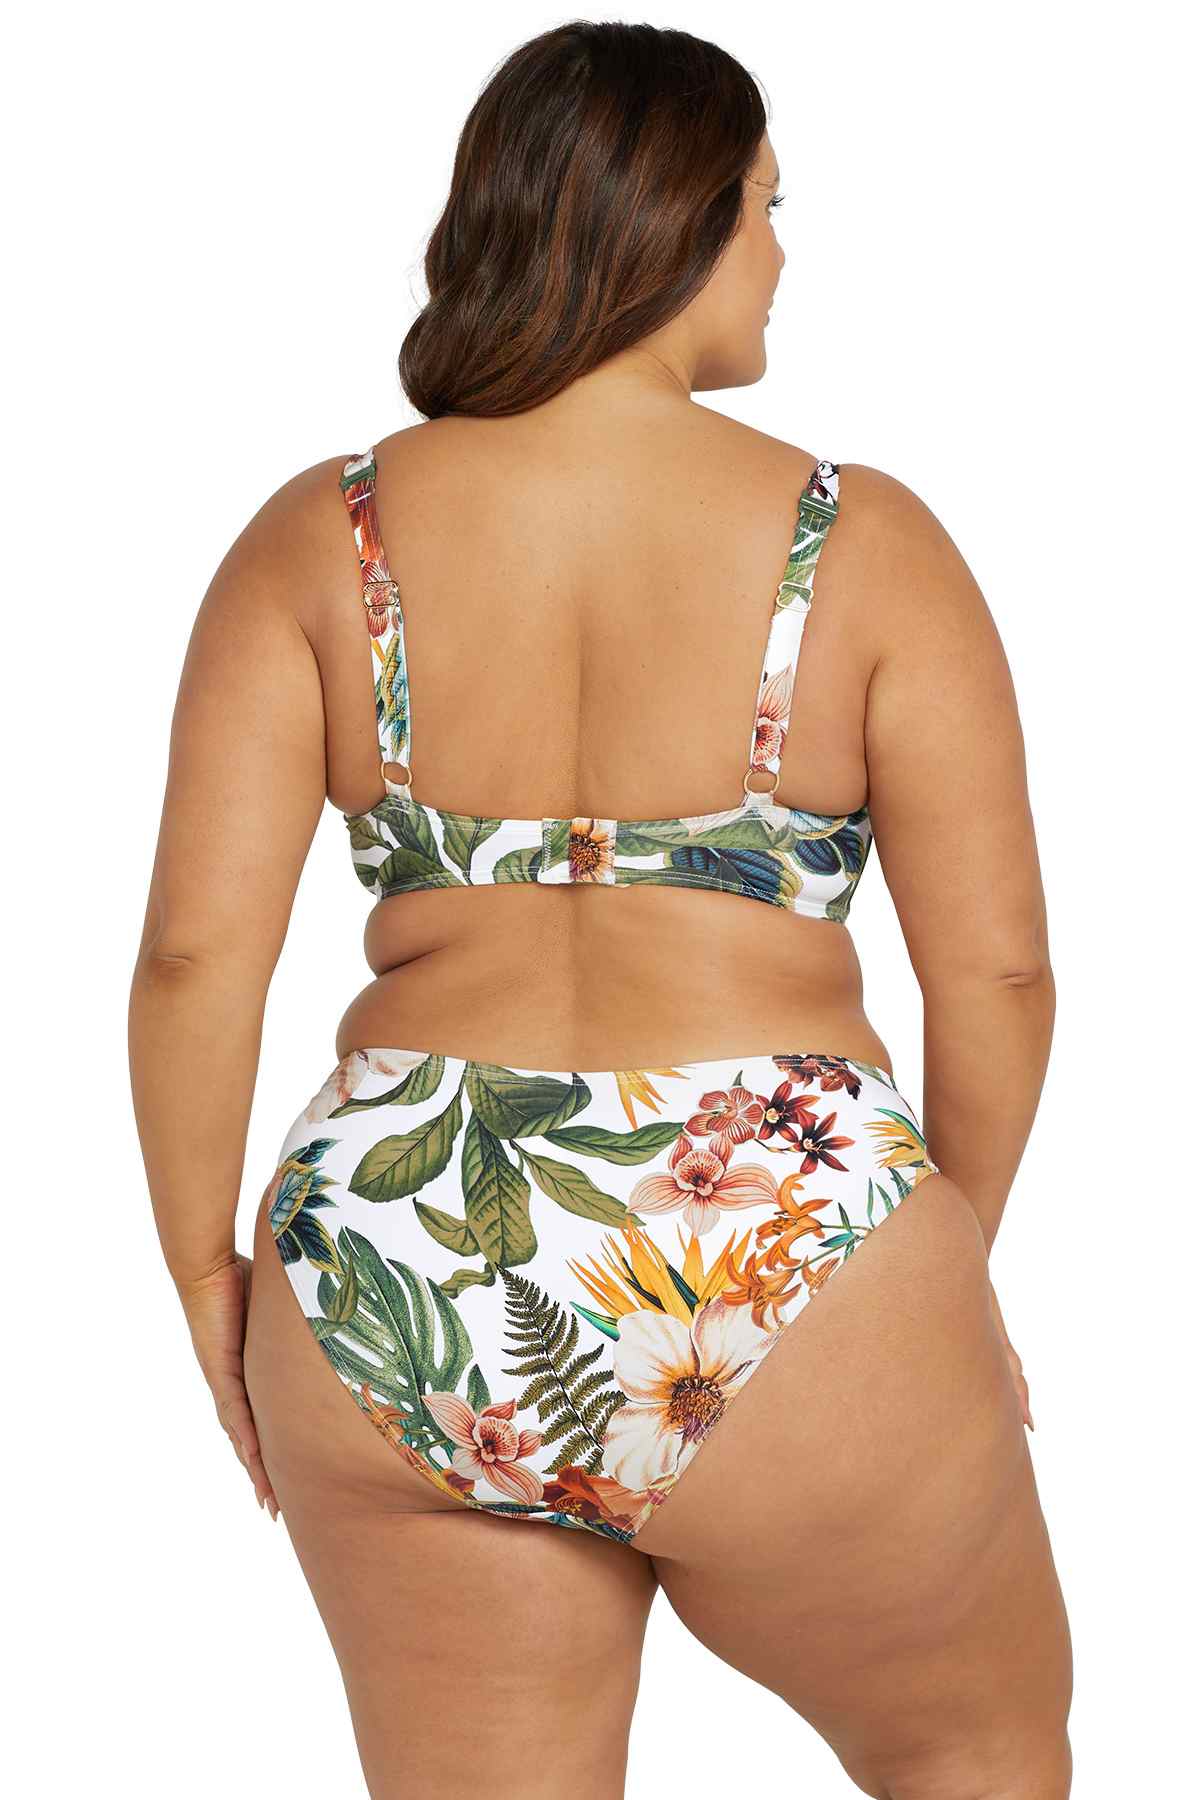 Artesands Monet Bikini Top - Into the Saltu